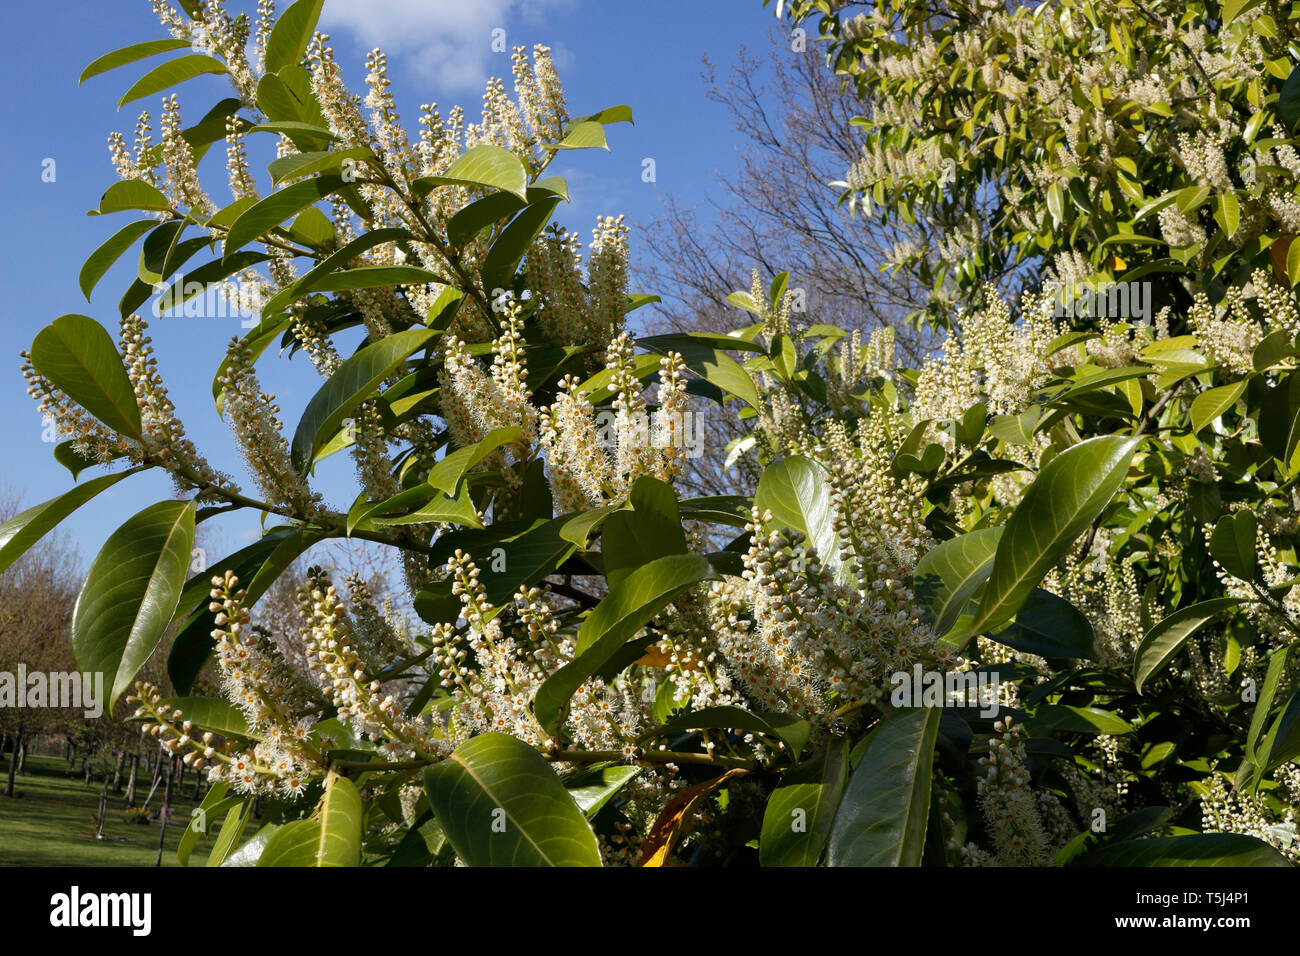 Flowers of the Evergreen Portugese Laurel tree - Prunus Lusitanica Portugal laurel Stock Photo